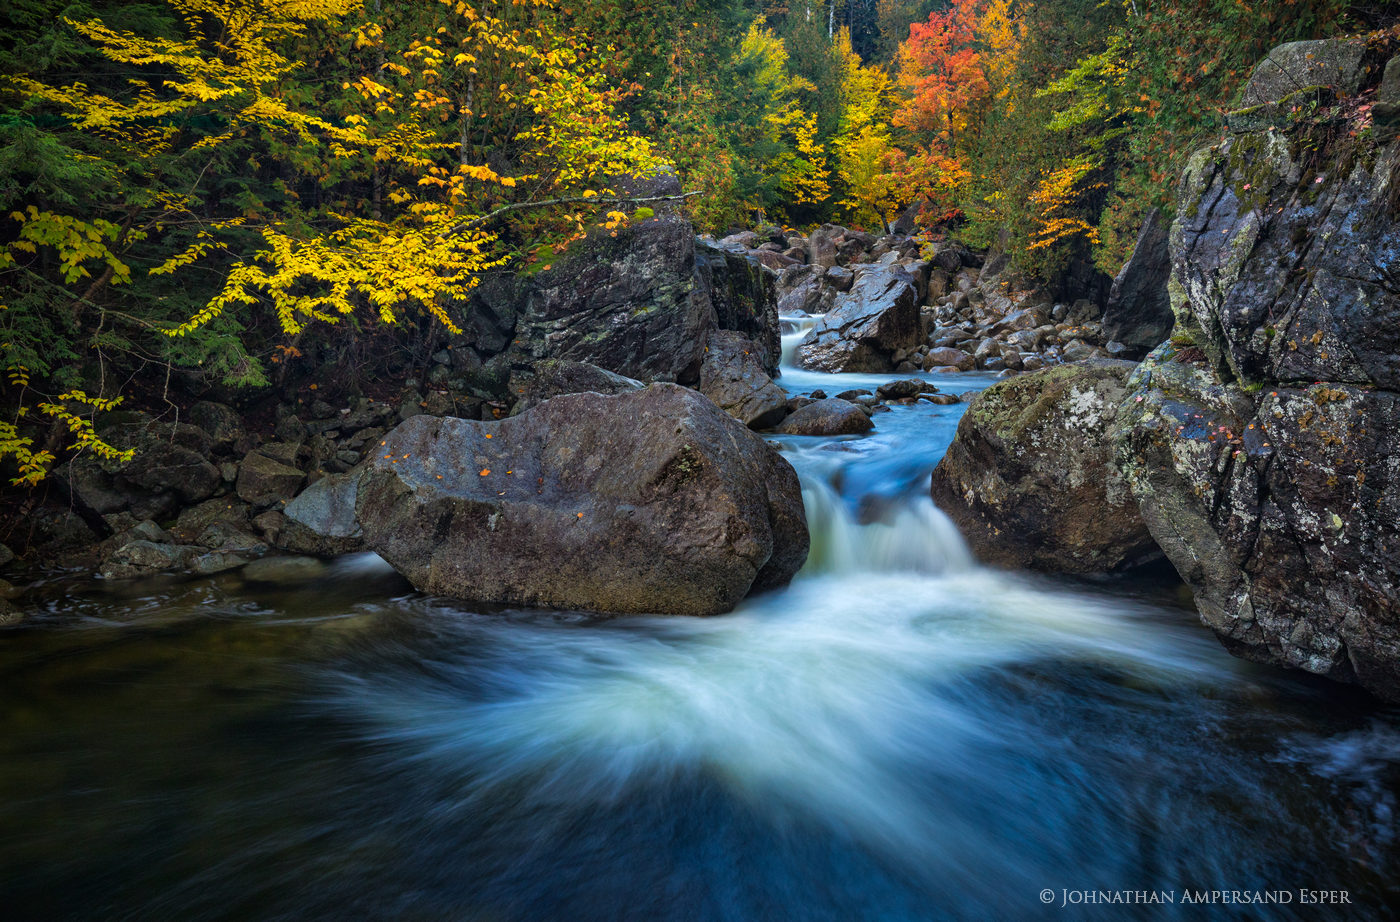 Boquet River,upper Boquet River,rainy,wet,fall,2018,autumn,maple leaves,foliage,wet rocks,red maple leaves,Adirondacks,stream...